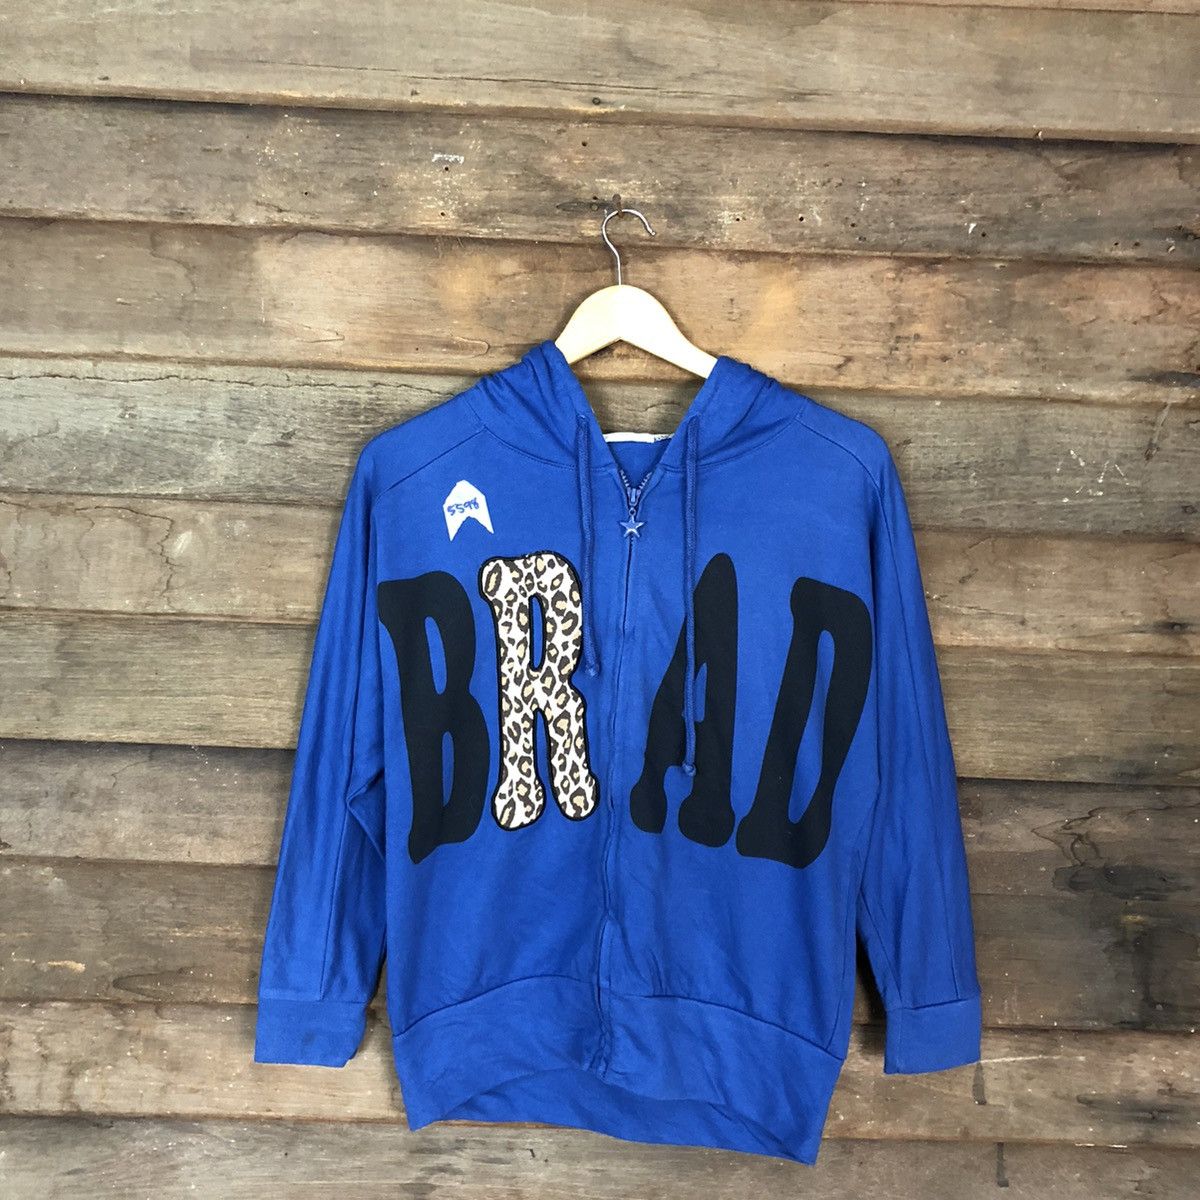 Japanese Brand Colza Brad Blue sweater ear Hoodies #5598 Size S / US 4 / IT 40 - 3 Thumbnail